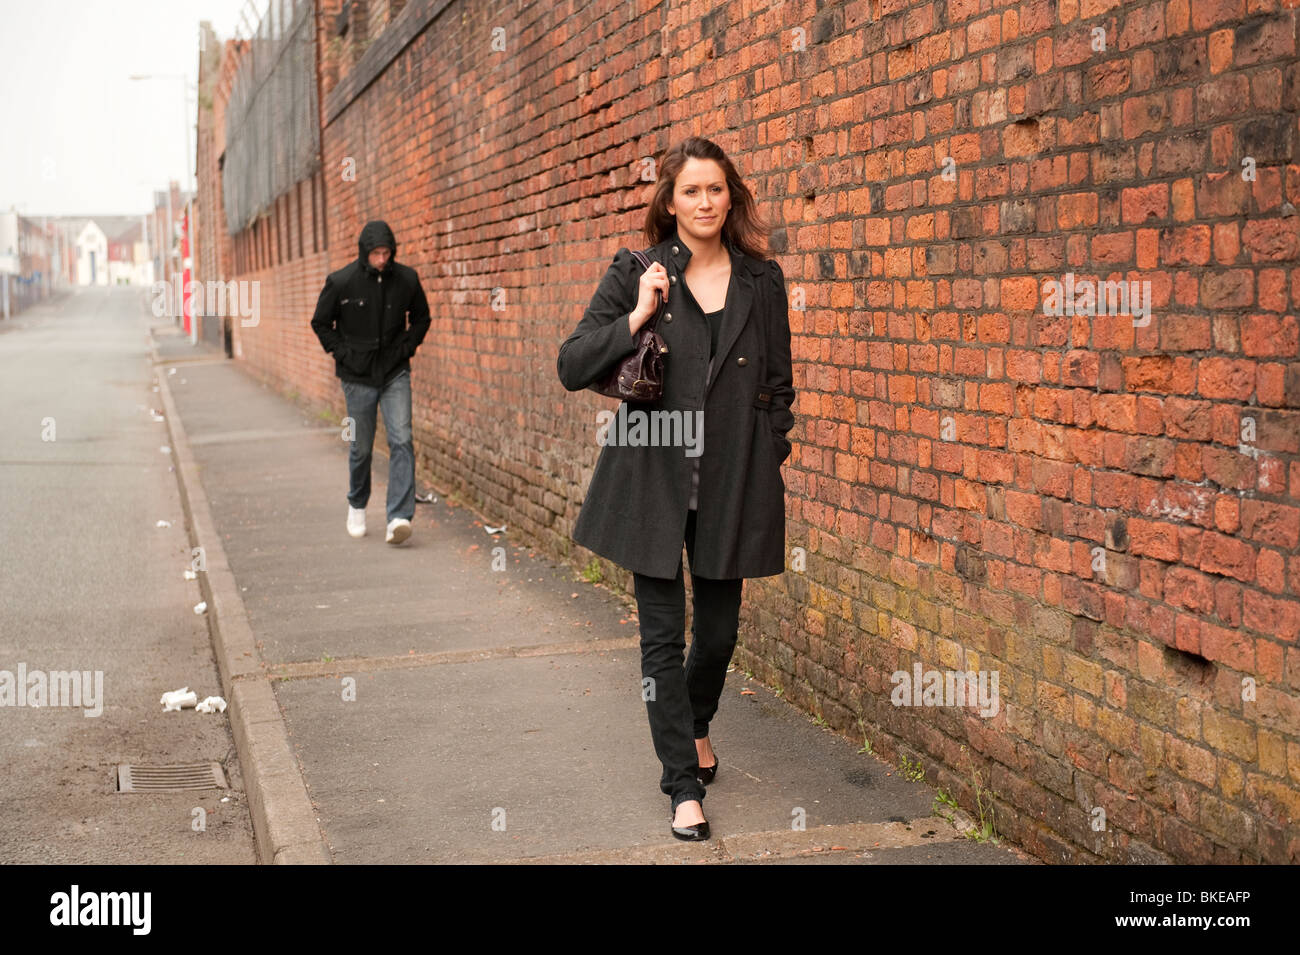 Lone woman walking along street with handbag and thug / criminal in ...